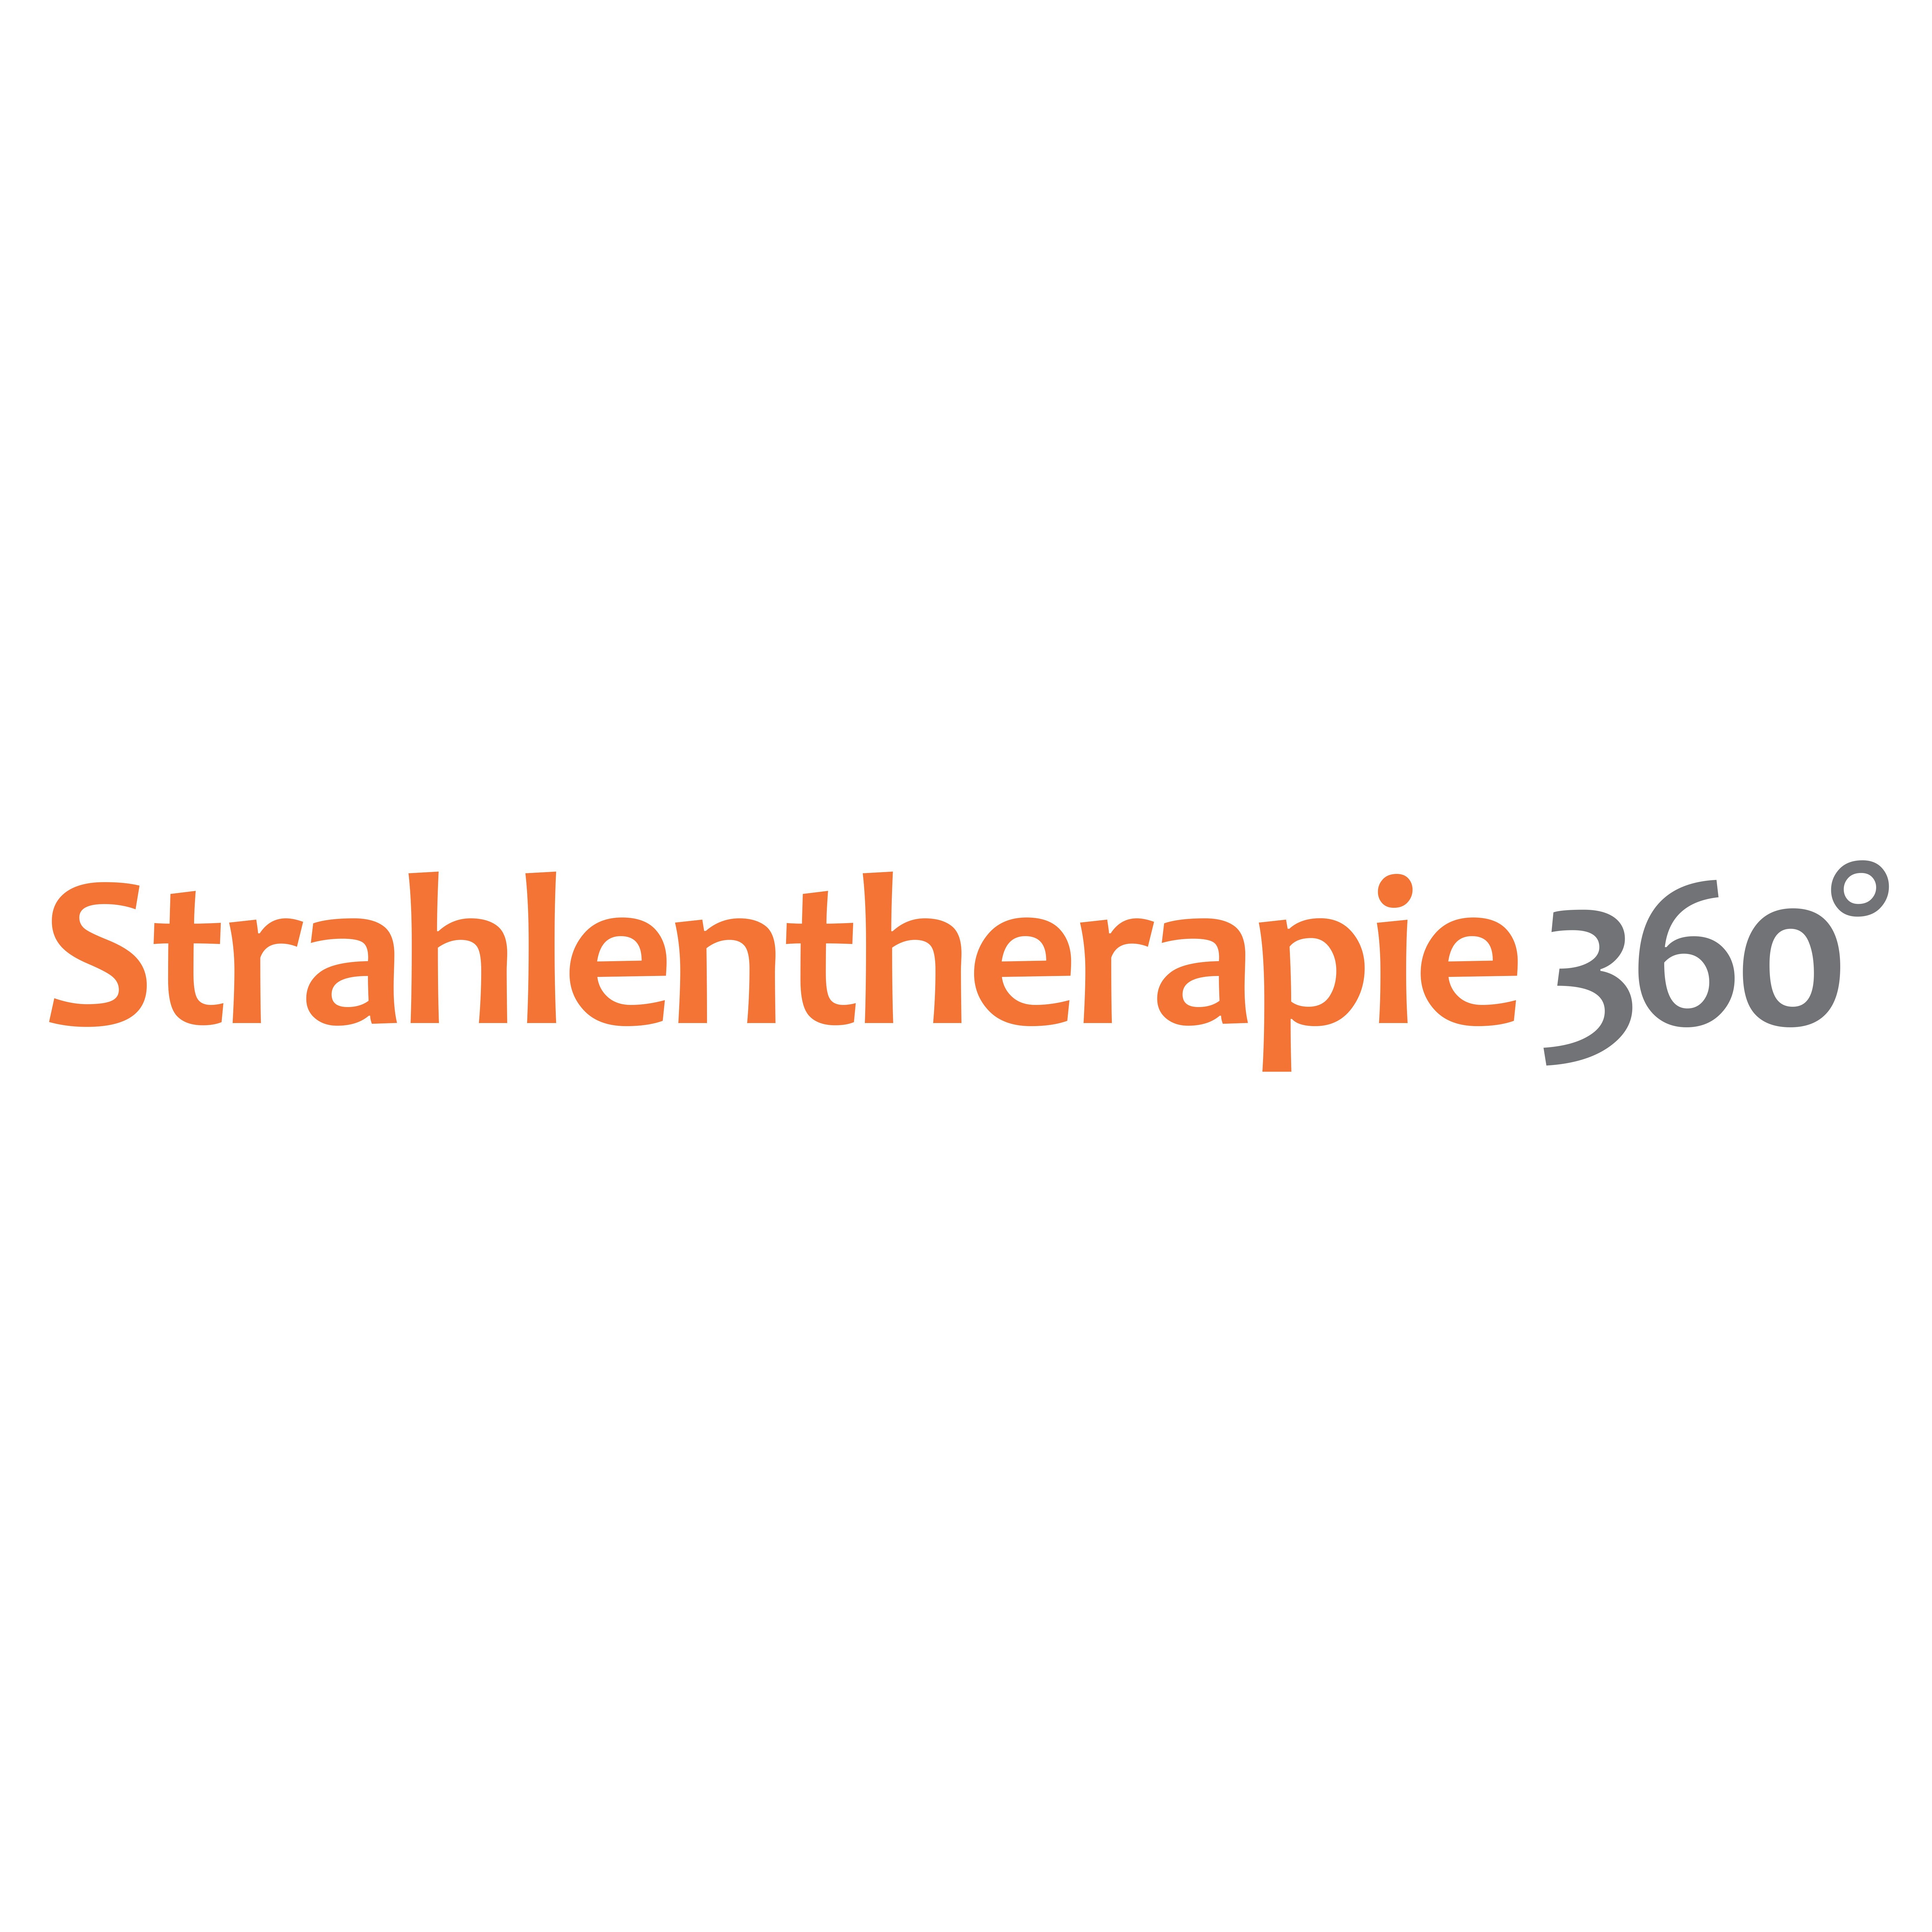 Strahlentherapie 360° - Praxis am Krankenhaus Maria-Hilf in Krefeld in Krefeld - Logo